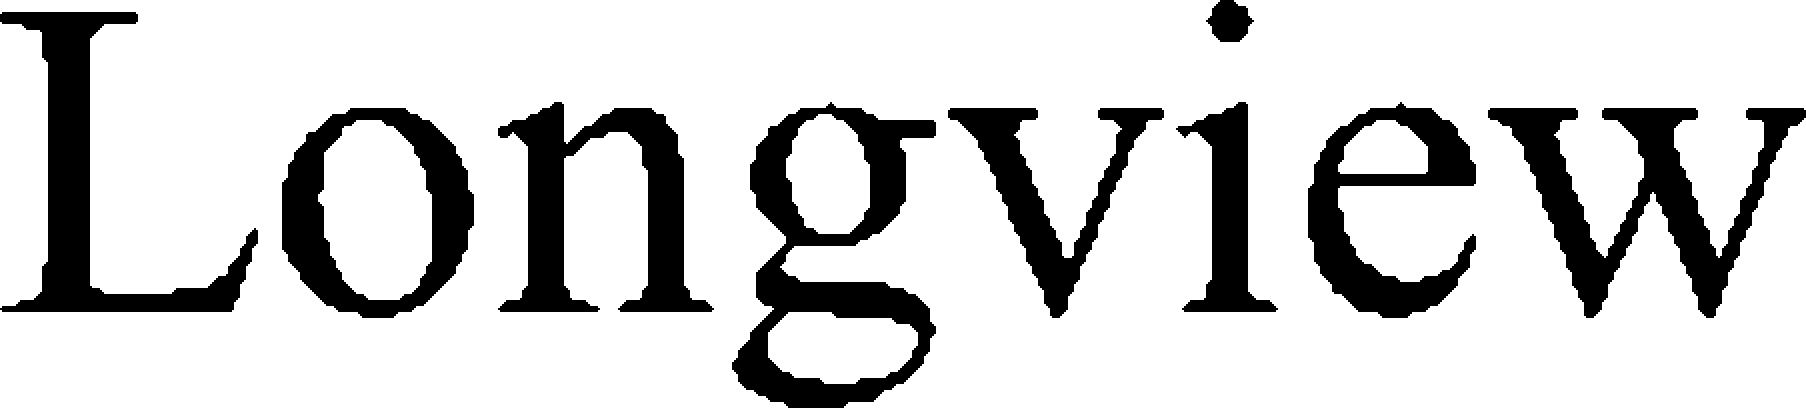 Trademark Logo LONGVIEW